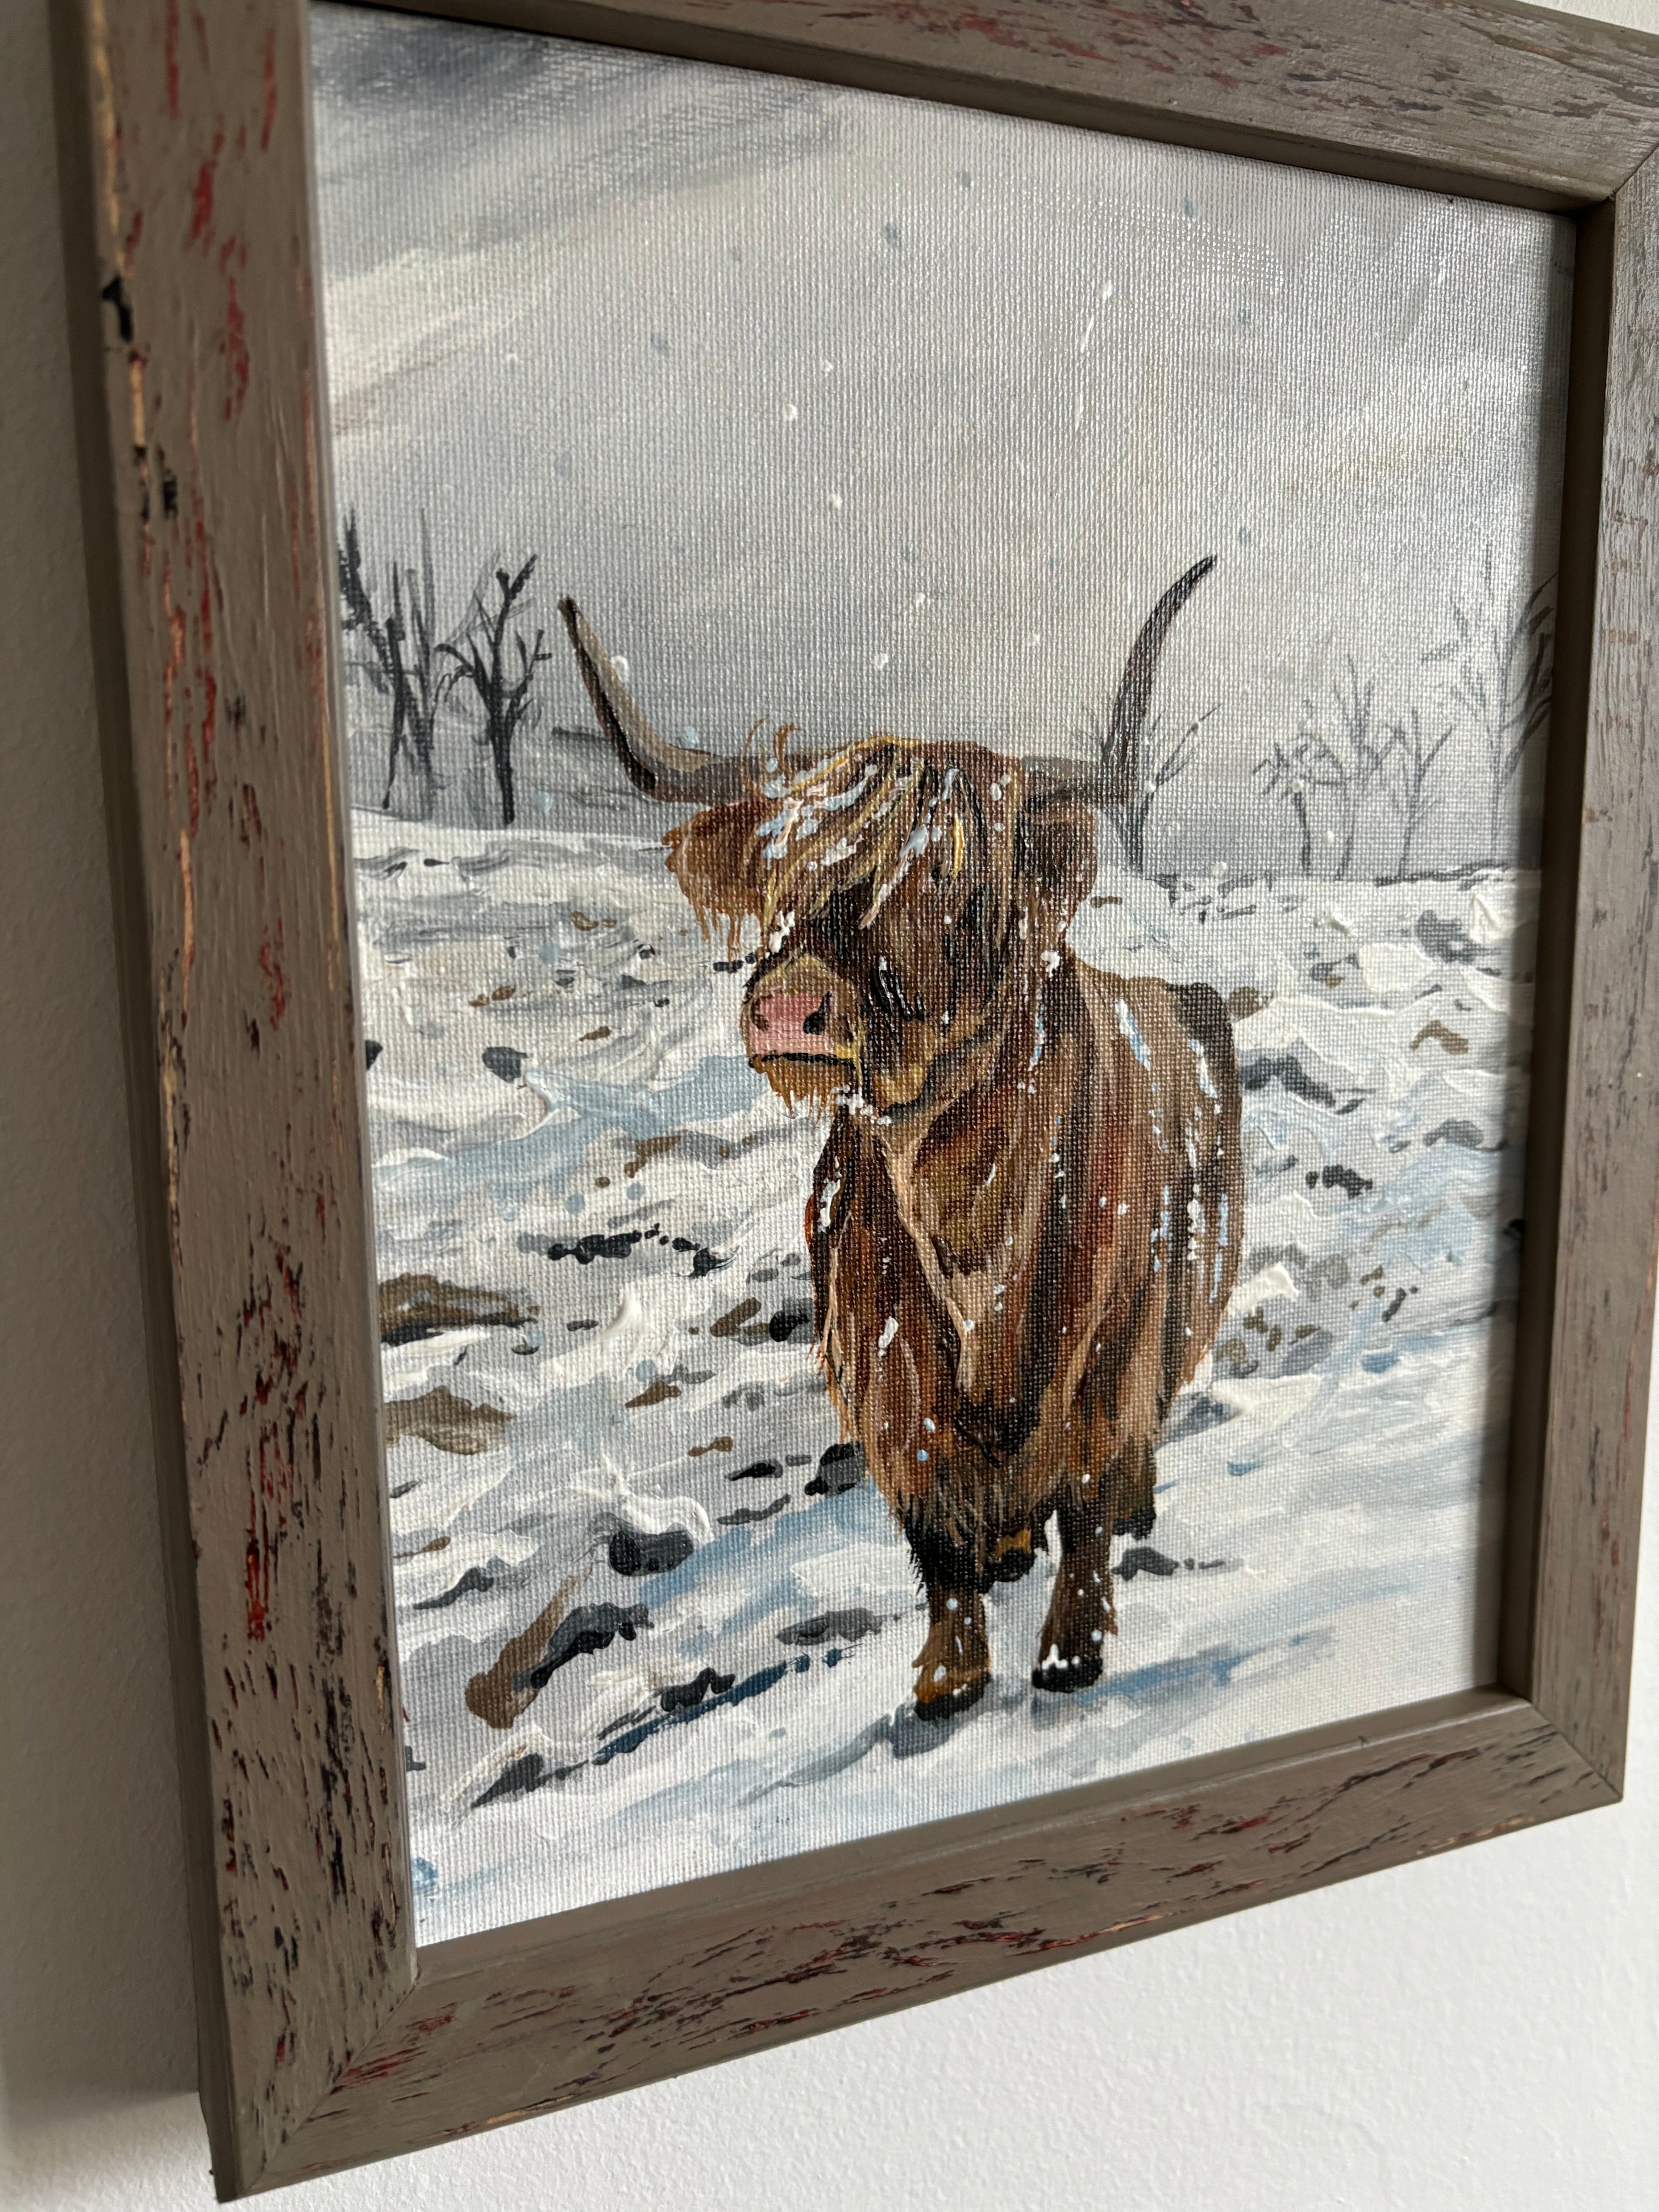 ‘Snowy Highland’ Framed Original